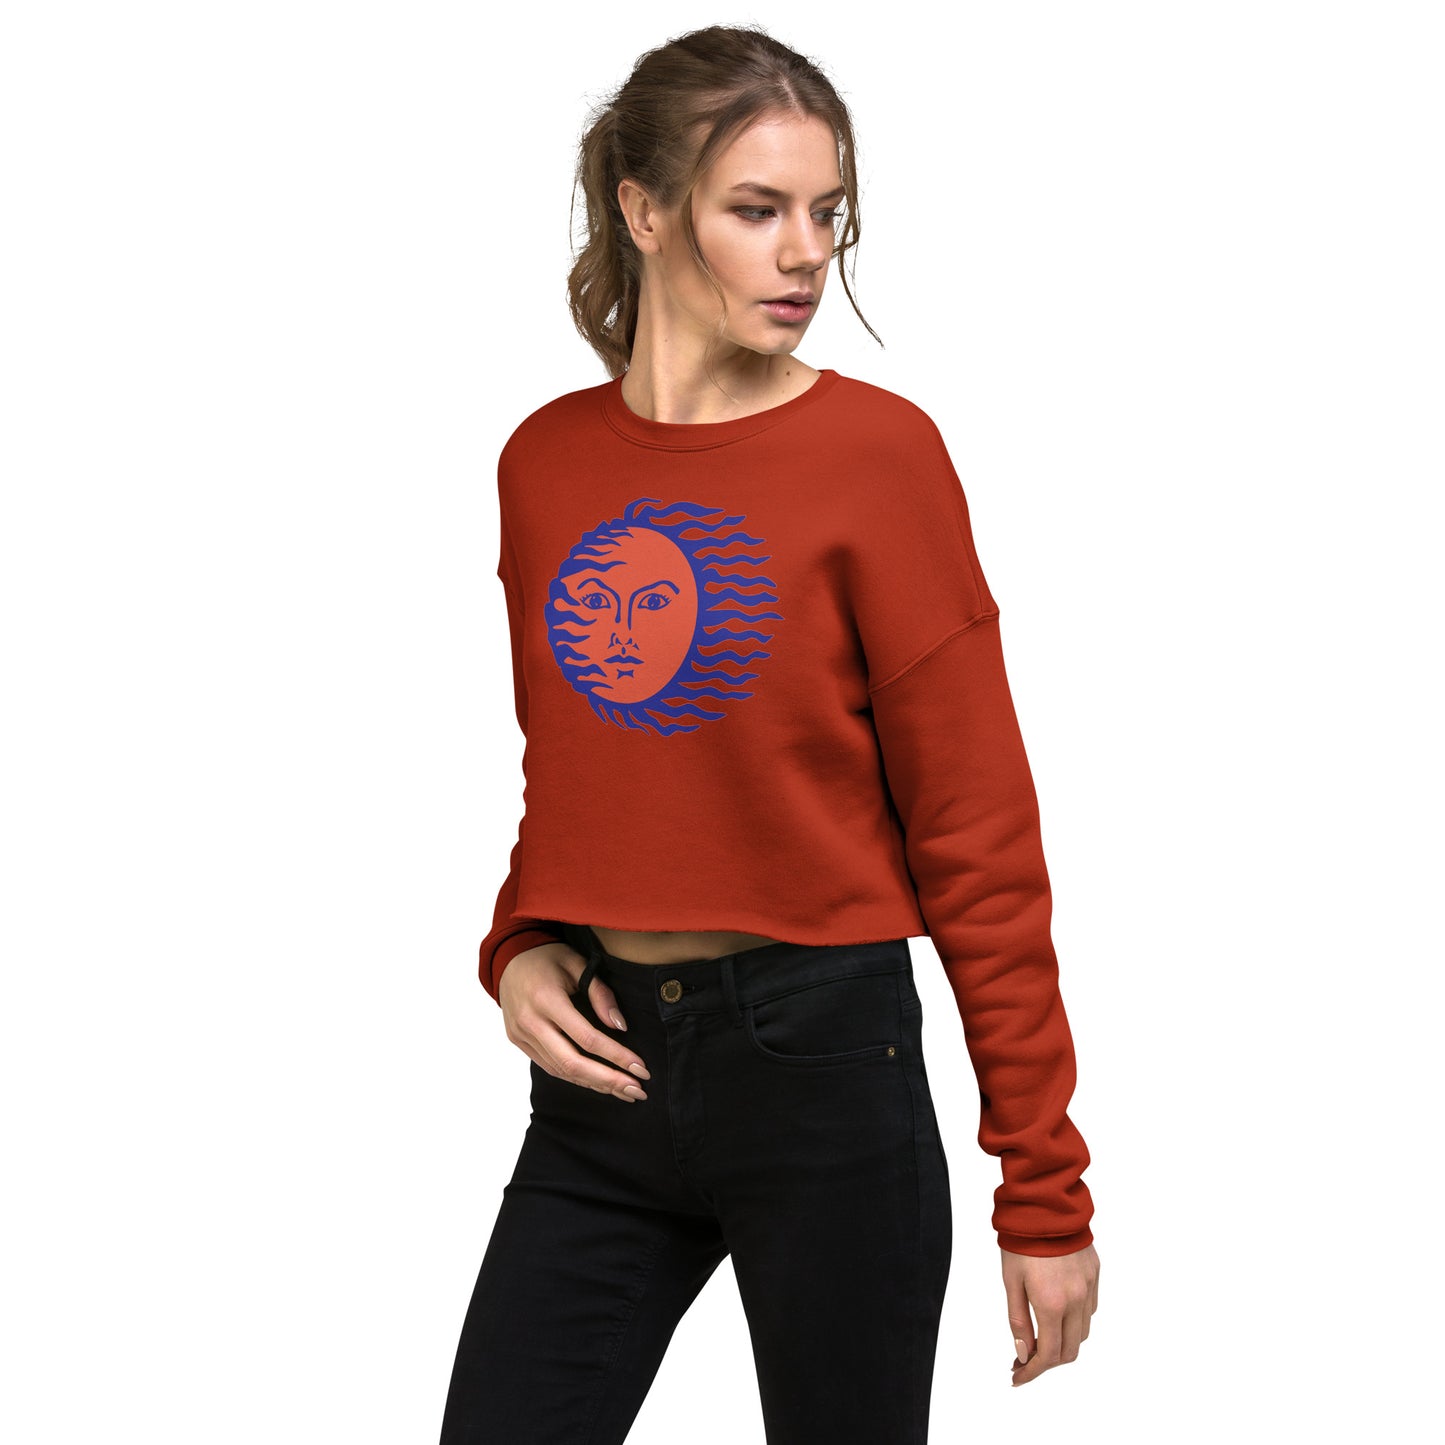 Fireball Sun Women's Crop Sweatshirt